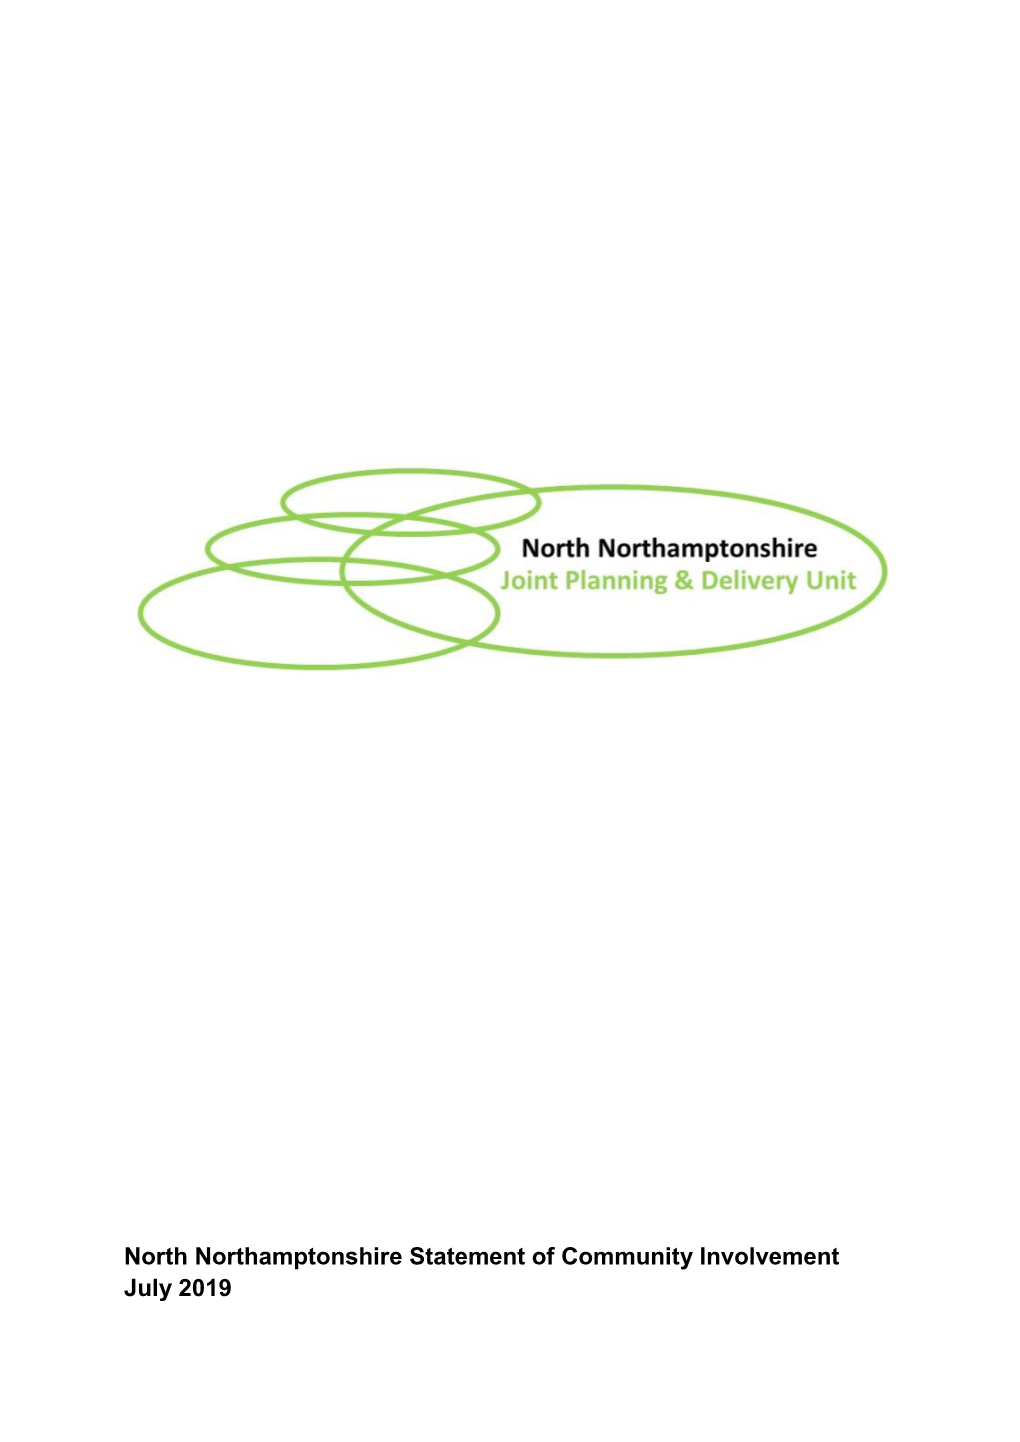 North Northamptonshire Statement of Community Involvement July 2019